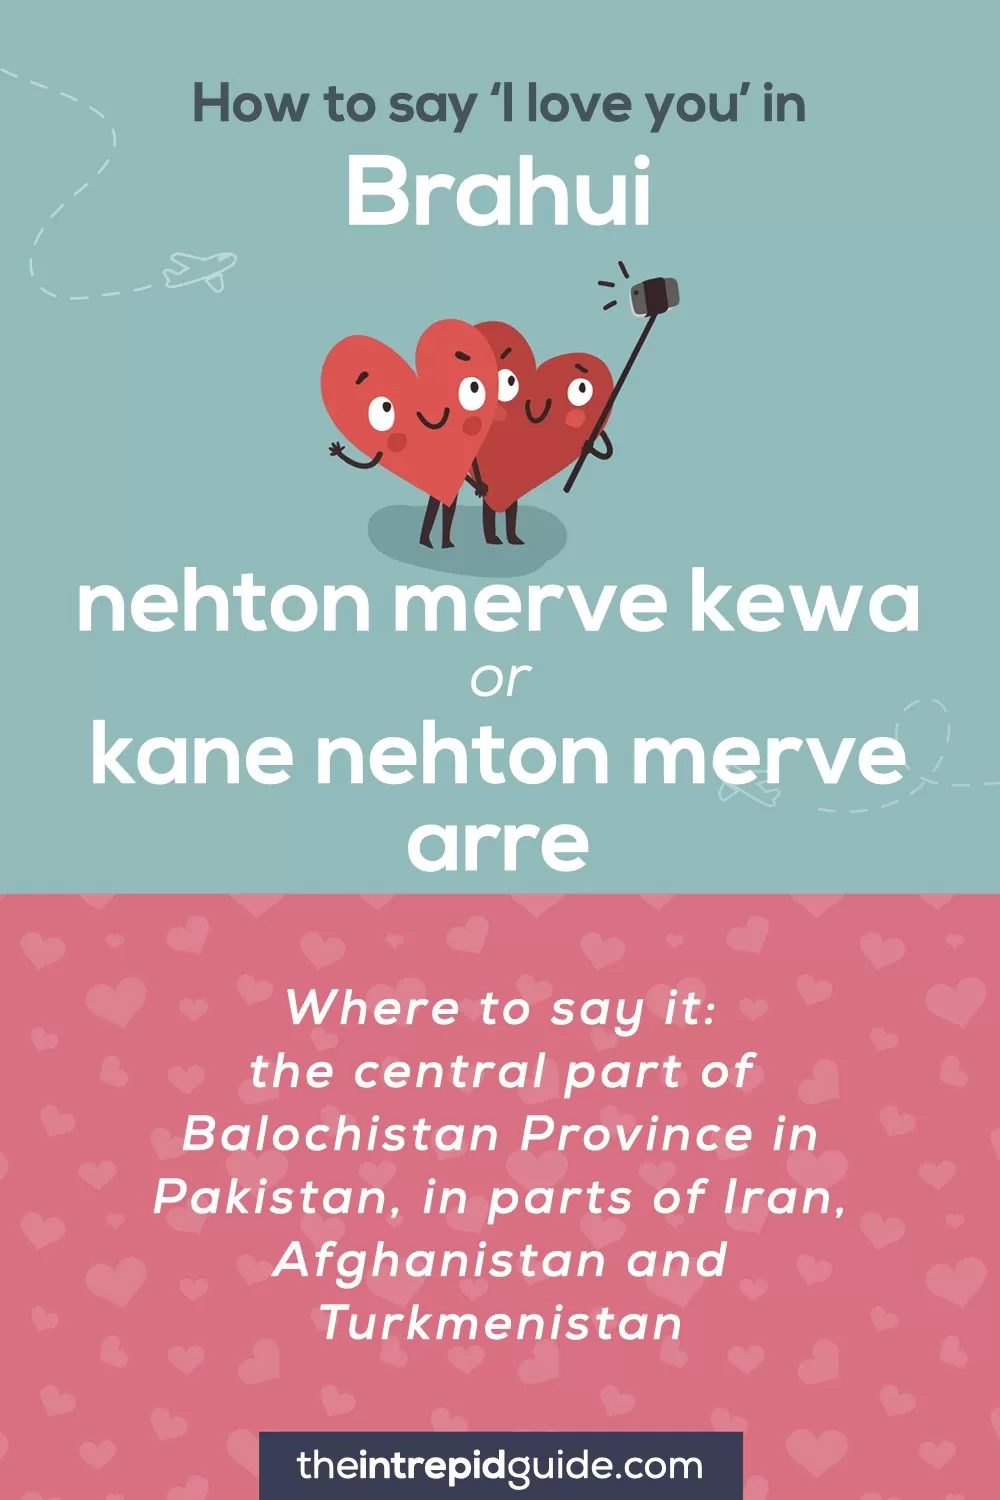 How to say I love you in different languages - Brahui - nehton merve kewa, kane nehton merve arre